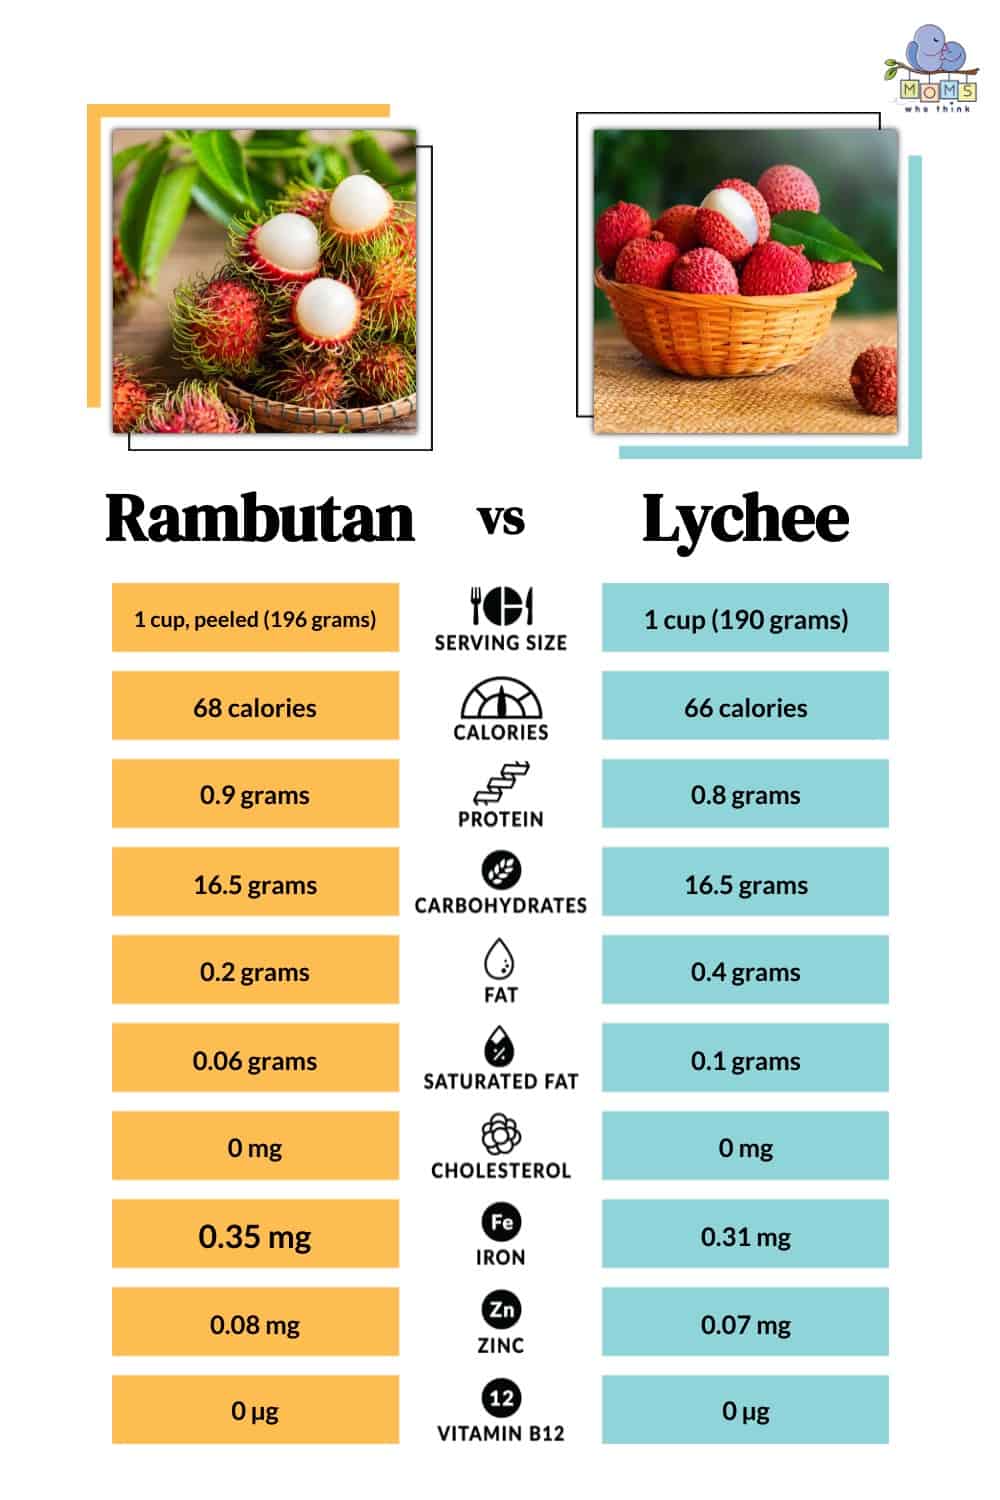 Rambutan vs Lychee Nutritional Facts